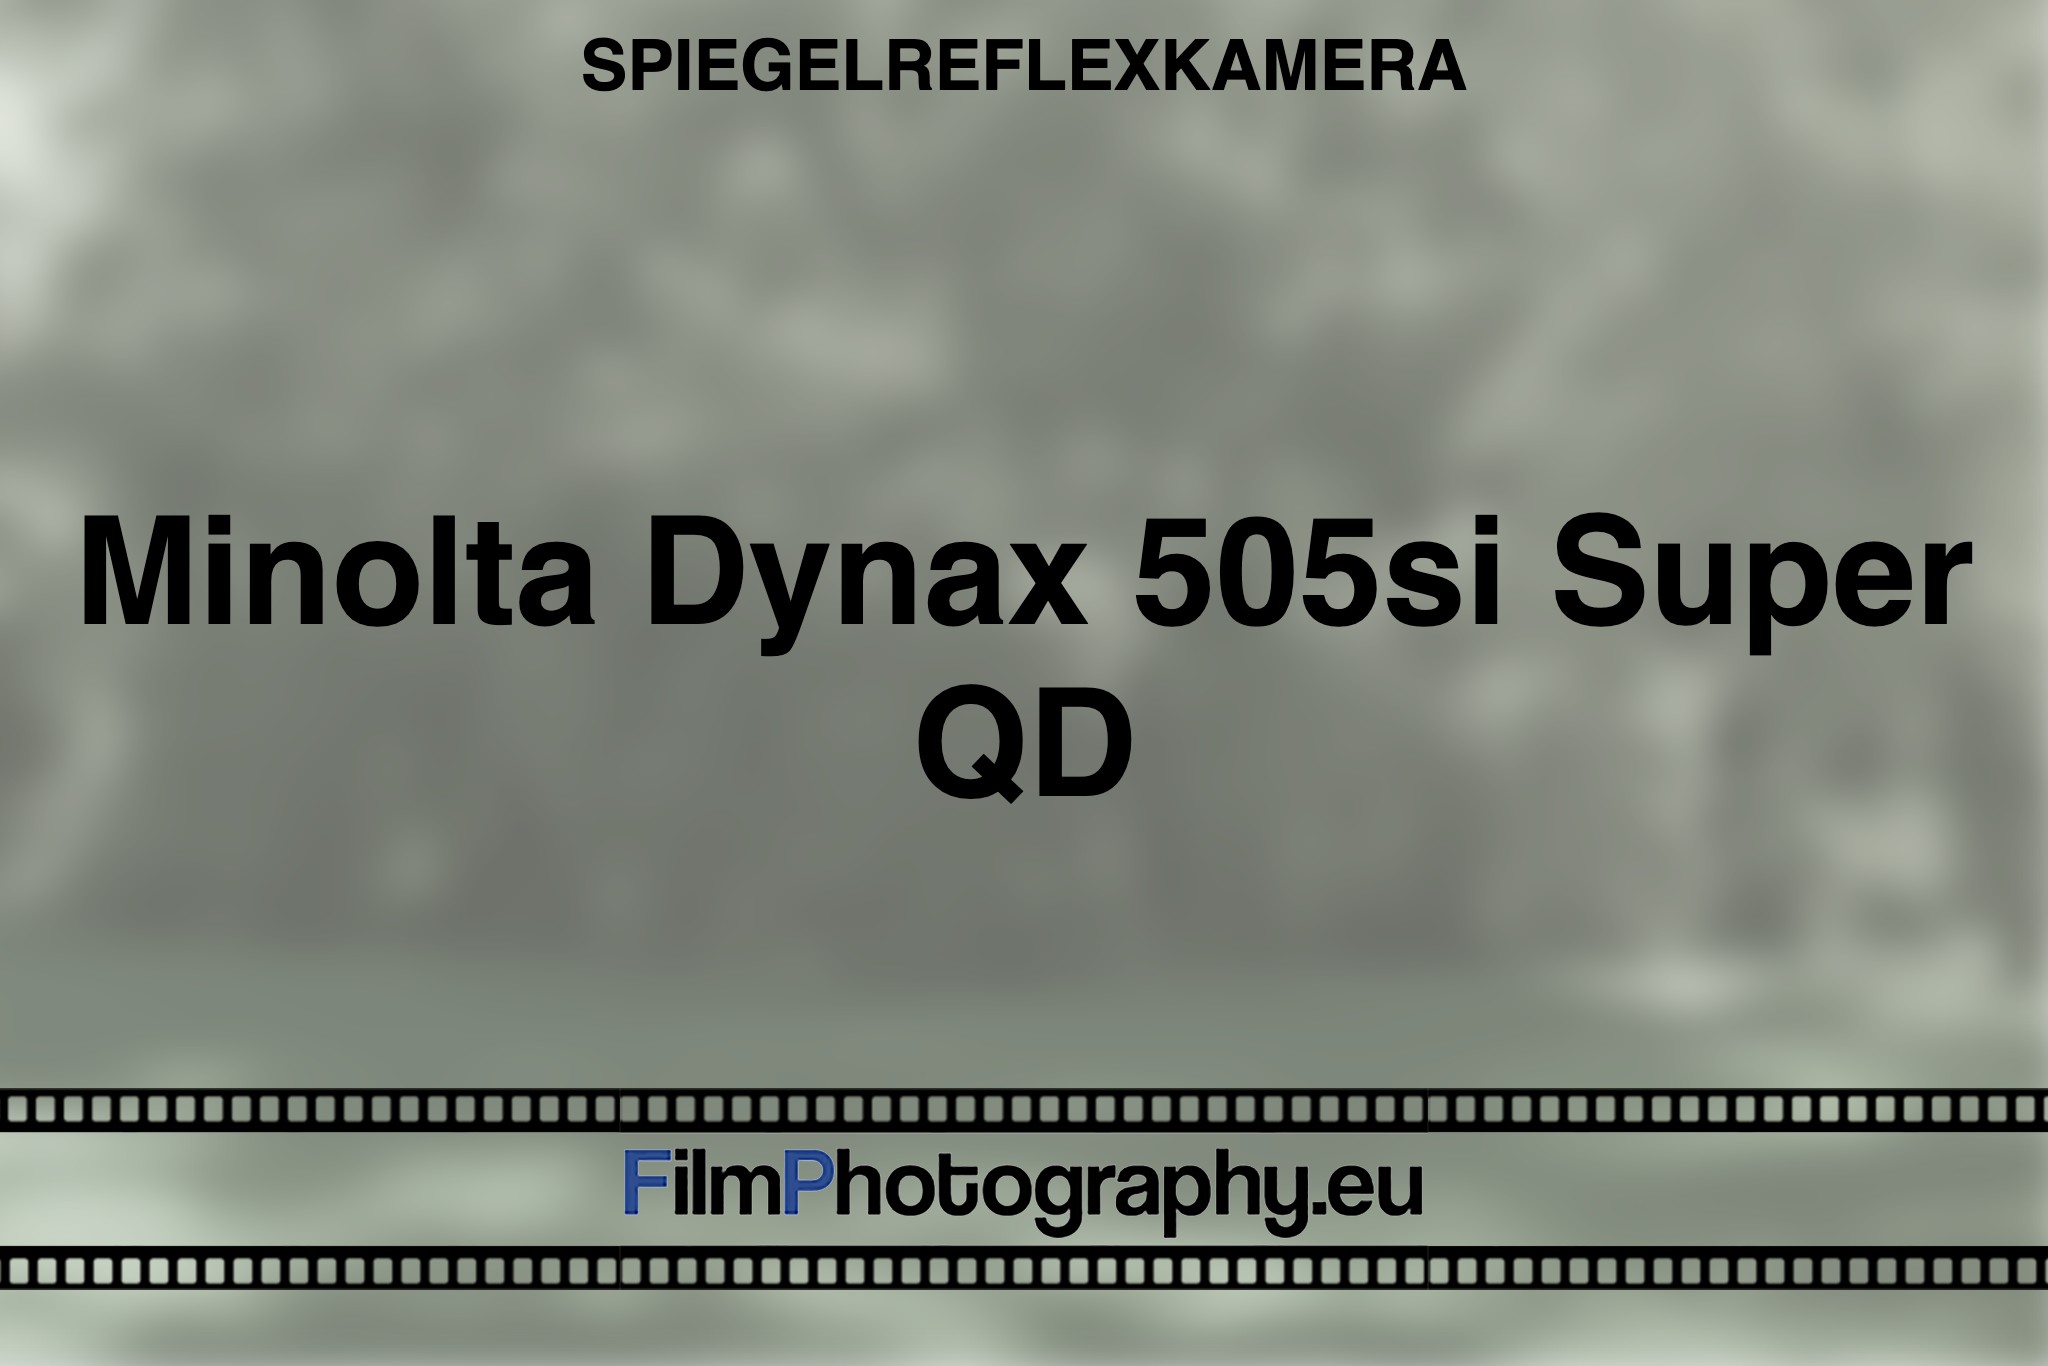 minolta-dynax-505si-super-qd-spiegelreflexkamera-bnv